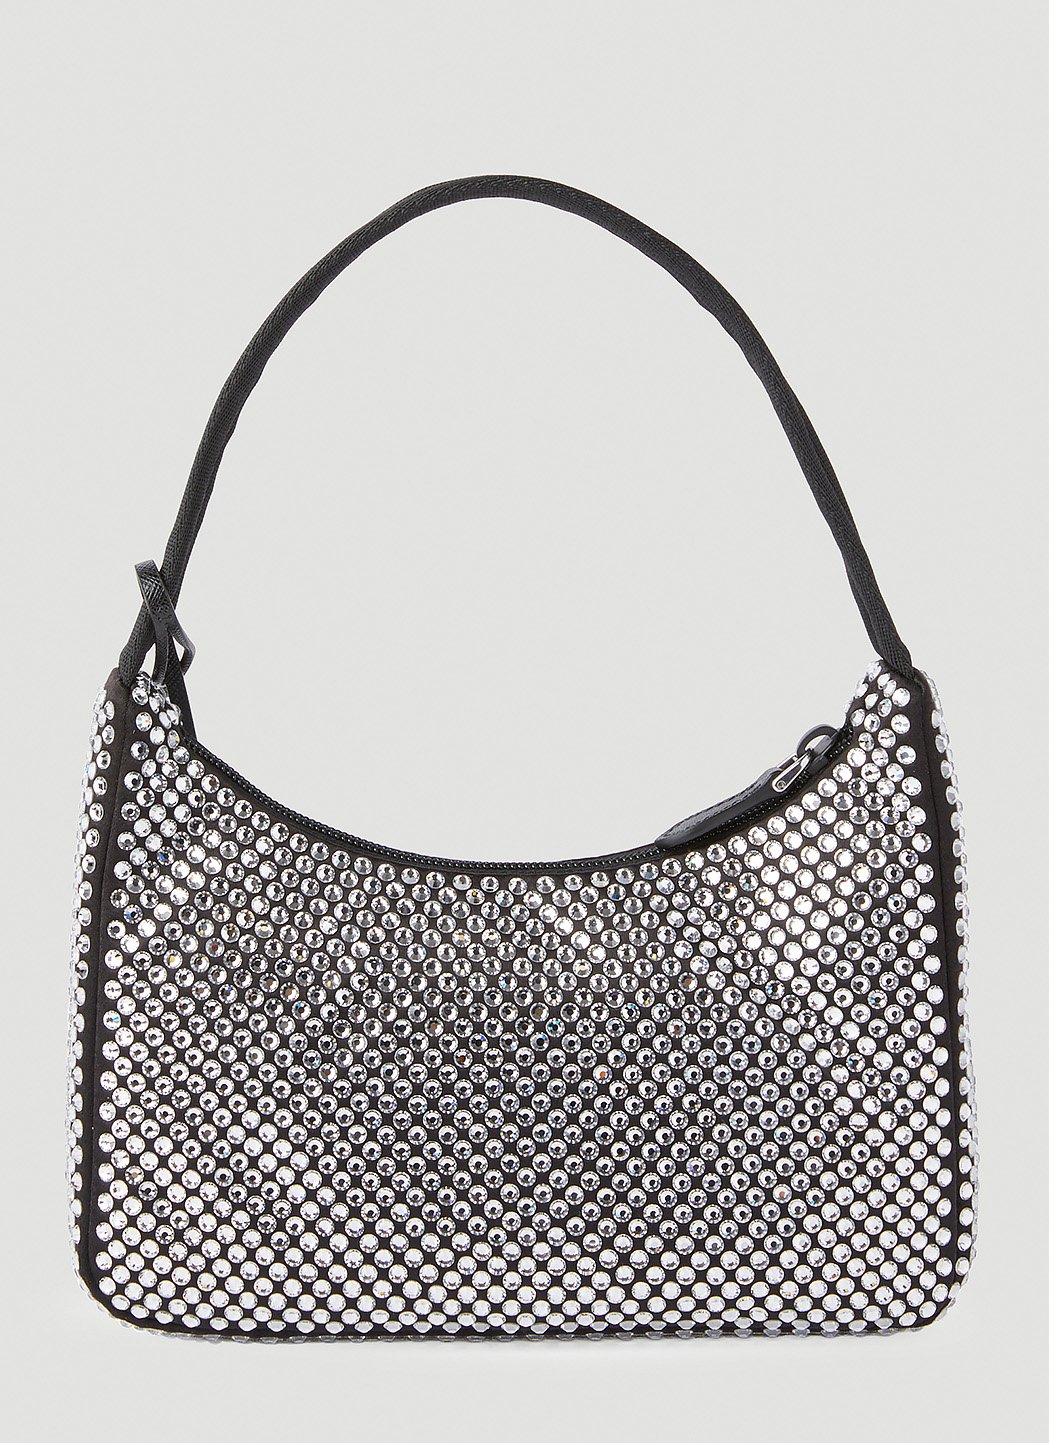 Prada Women's Crystal-Embellished Mini Handbag in Silver | LN-CC